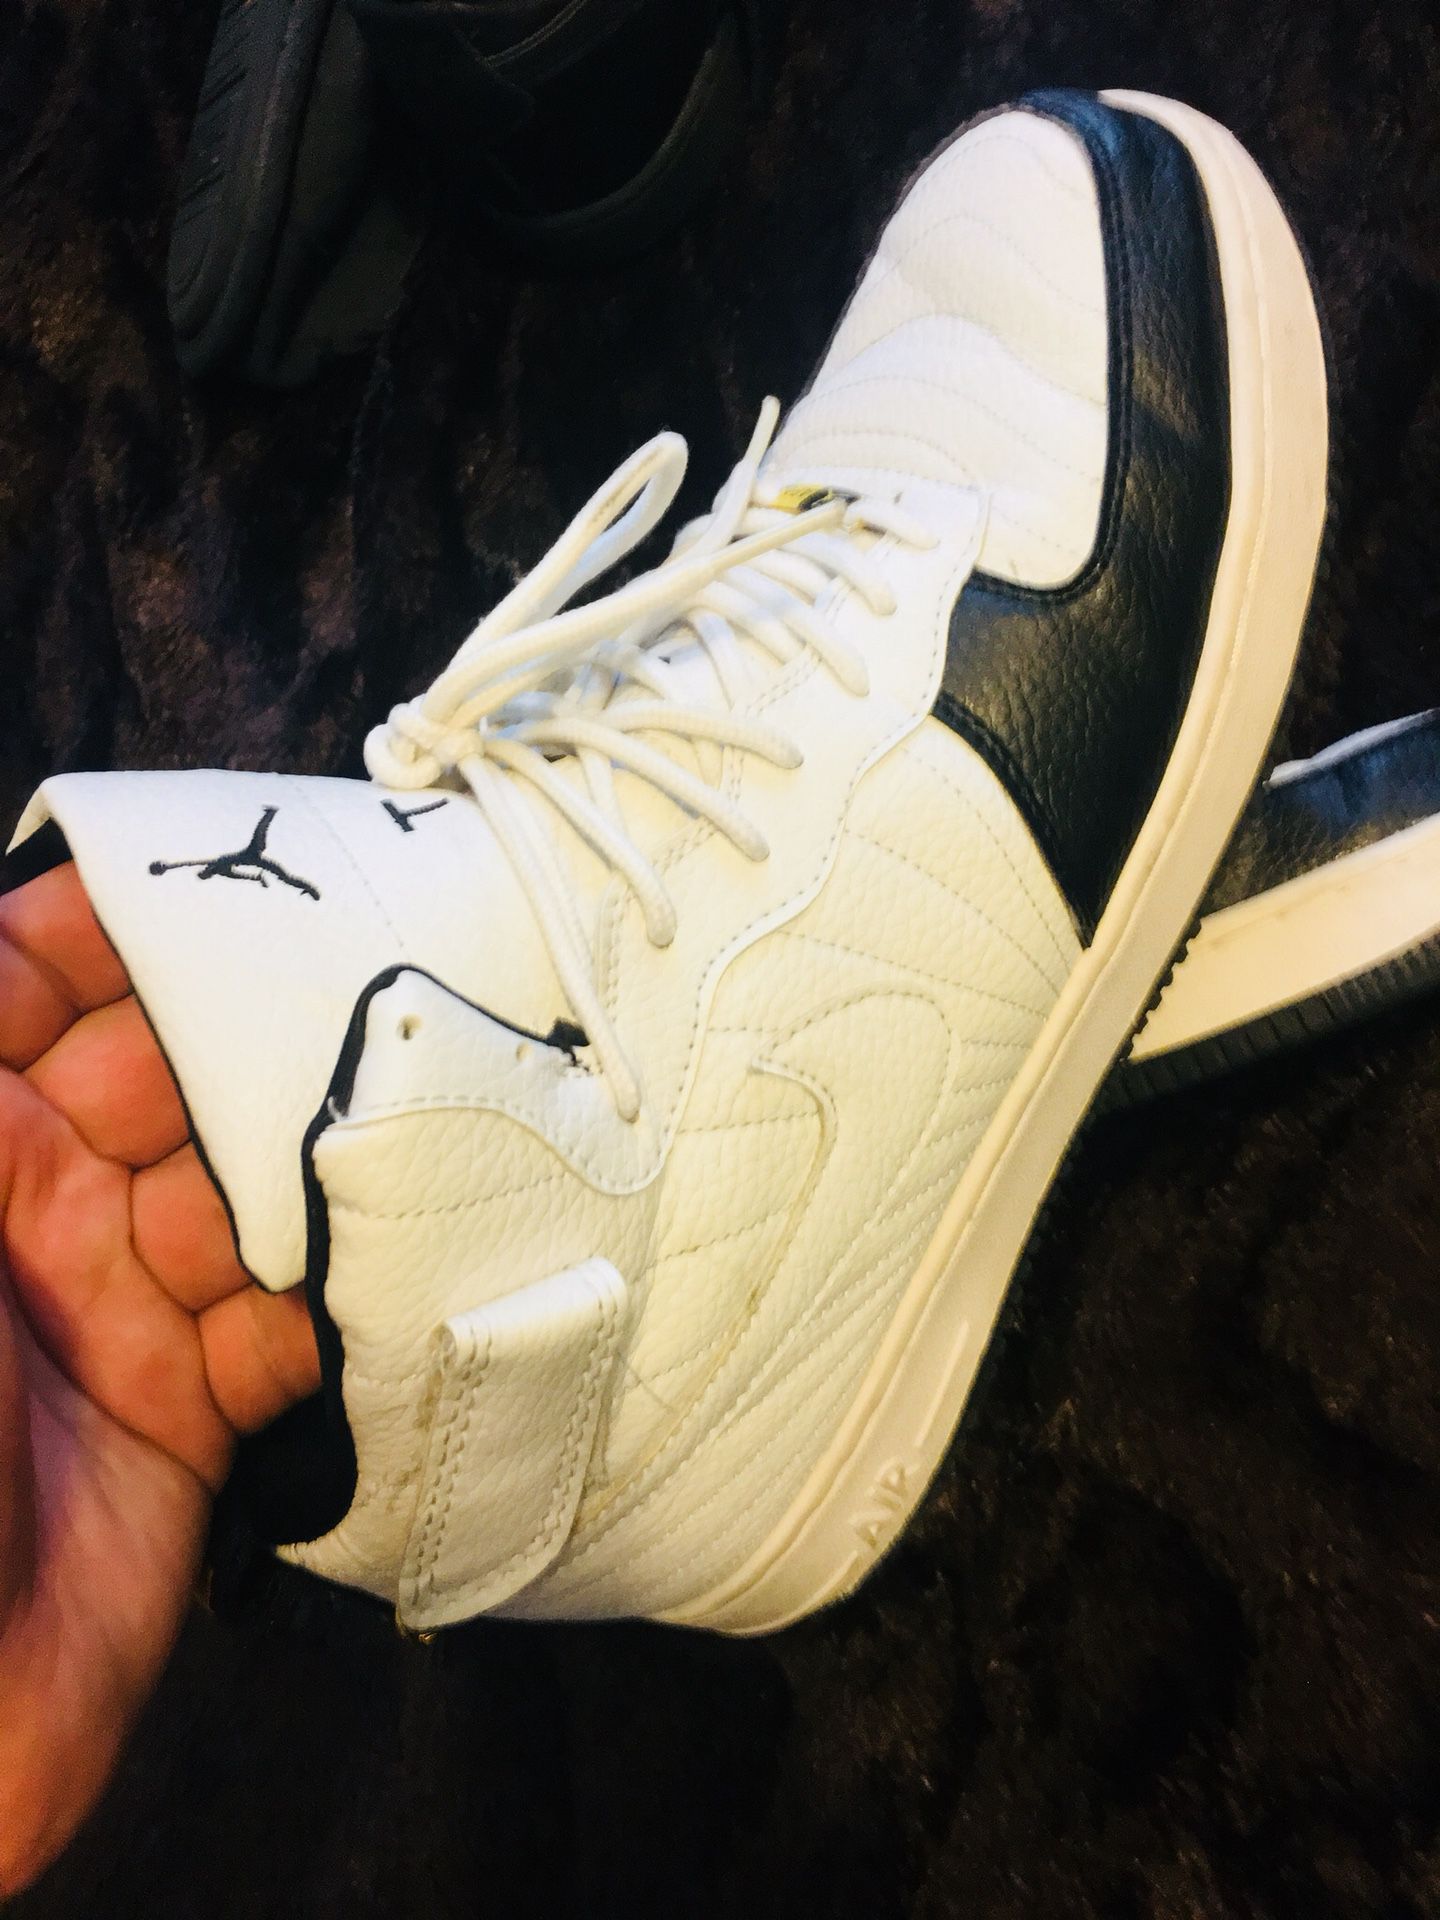 Nike Air Jordan men’s size 10.5 like new